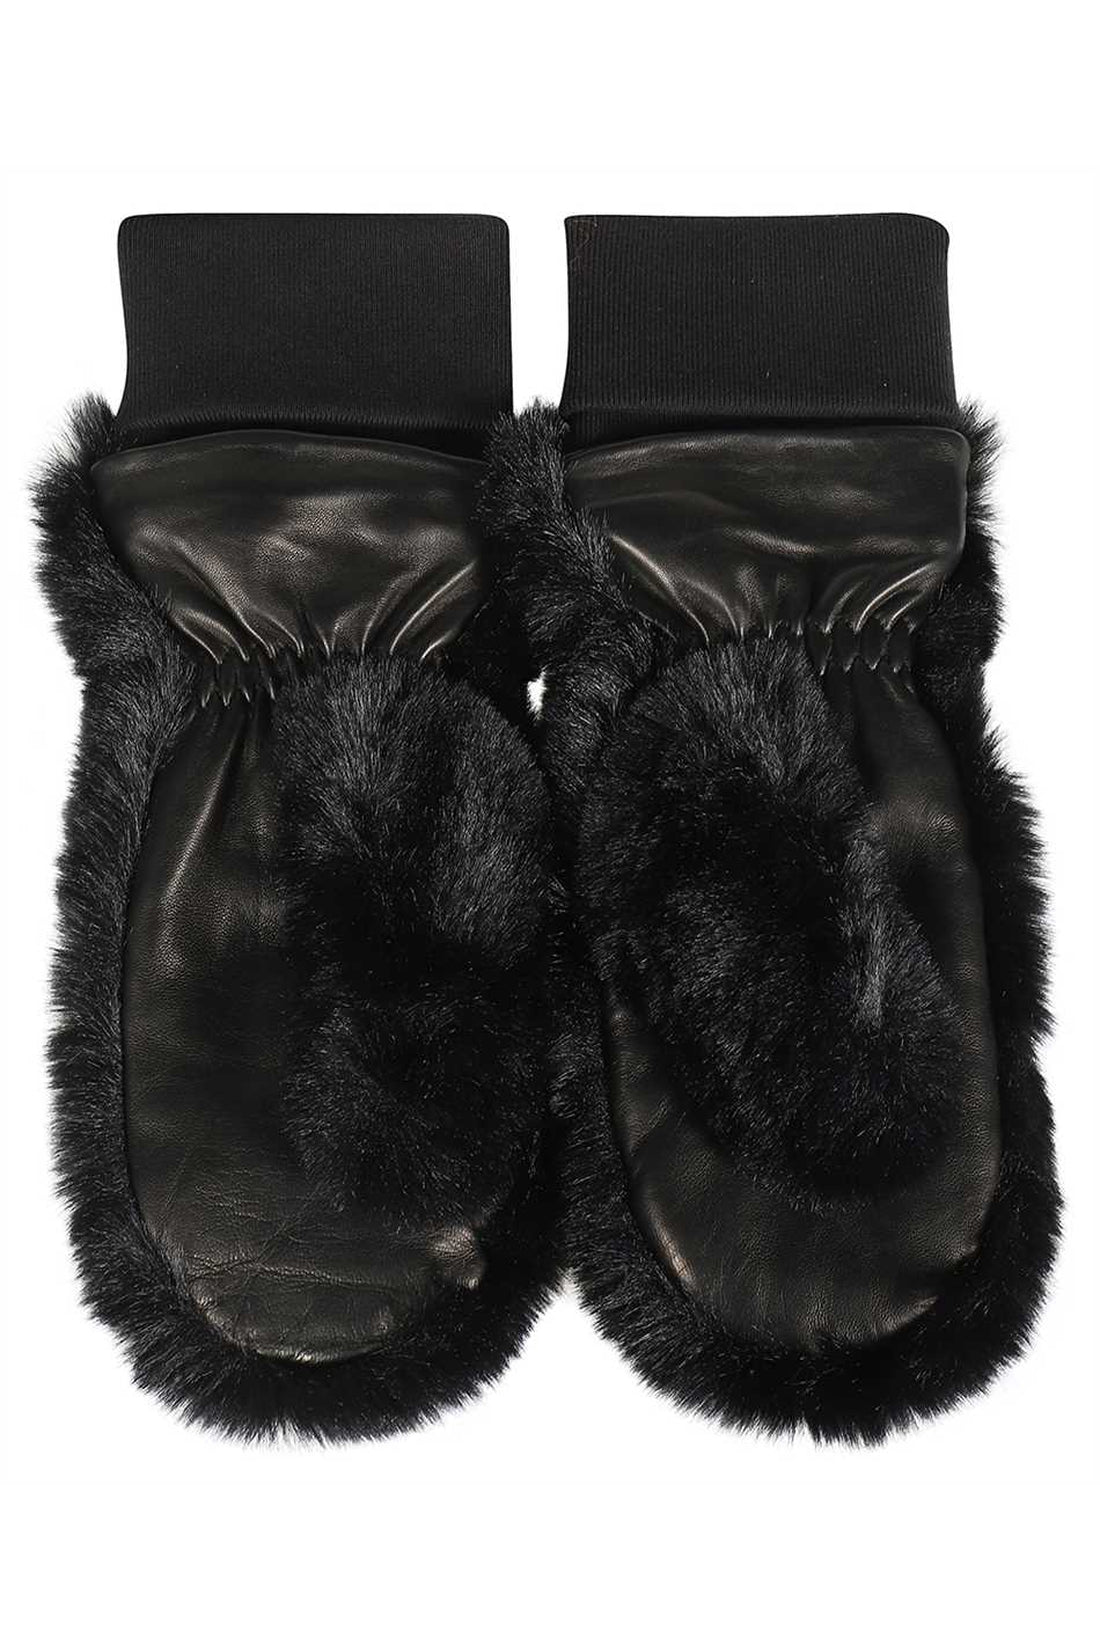 Moose Knuckles-OUTLET-SALE-Gloves with faux fur detail-ARCHIVIST